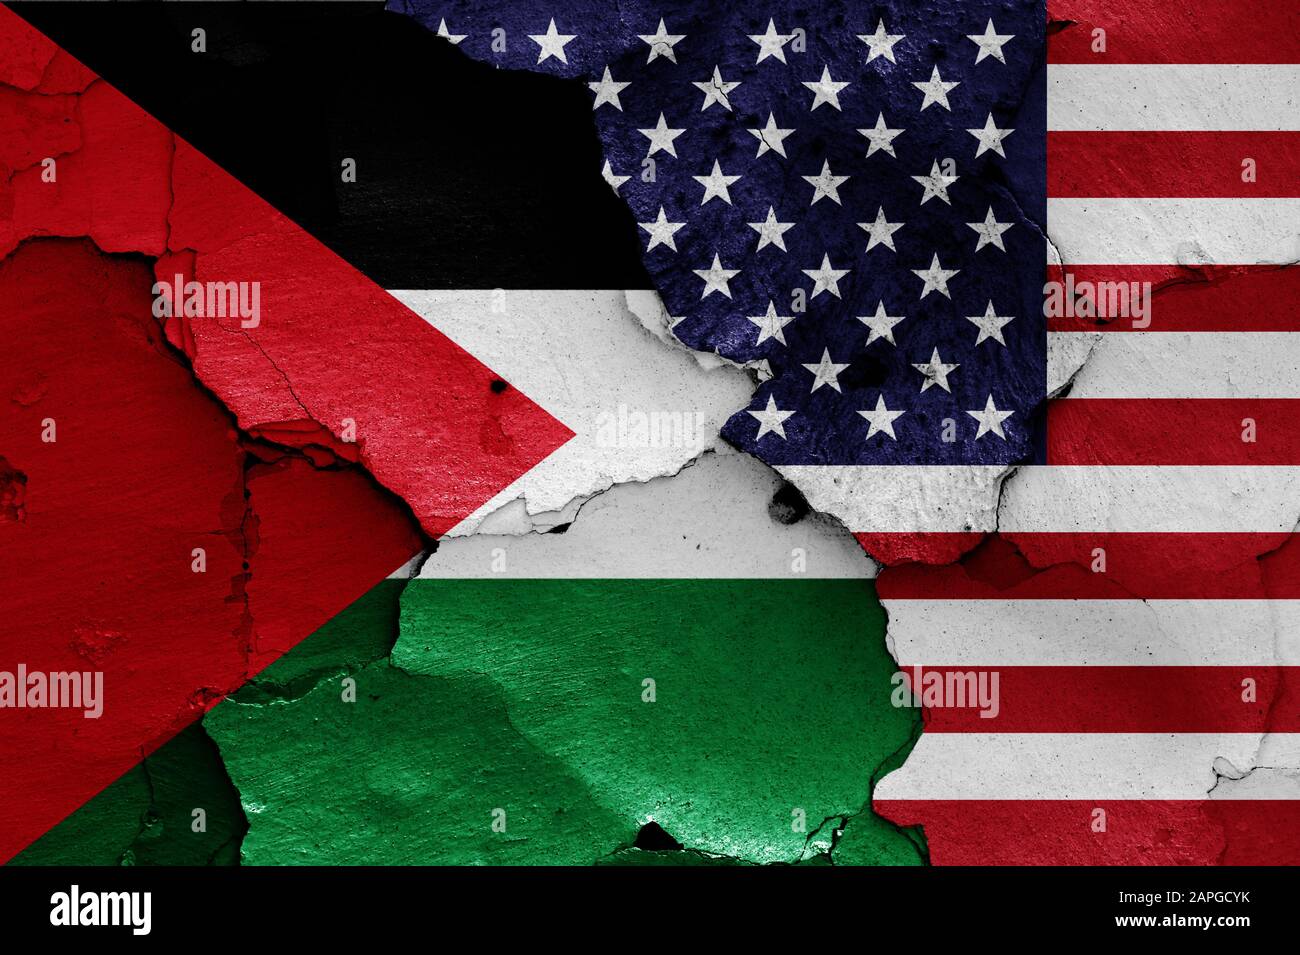 Usa palästina flagge -Fotos und -Bildmaterial in hoher Auflösung – Alamy